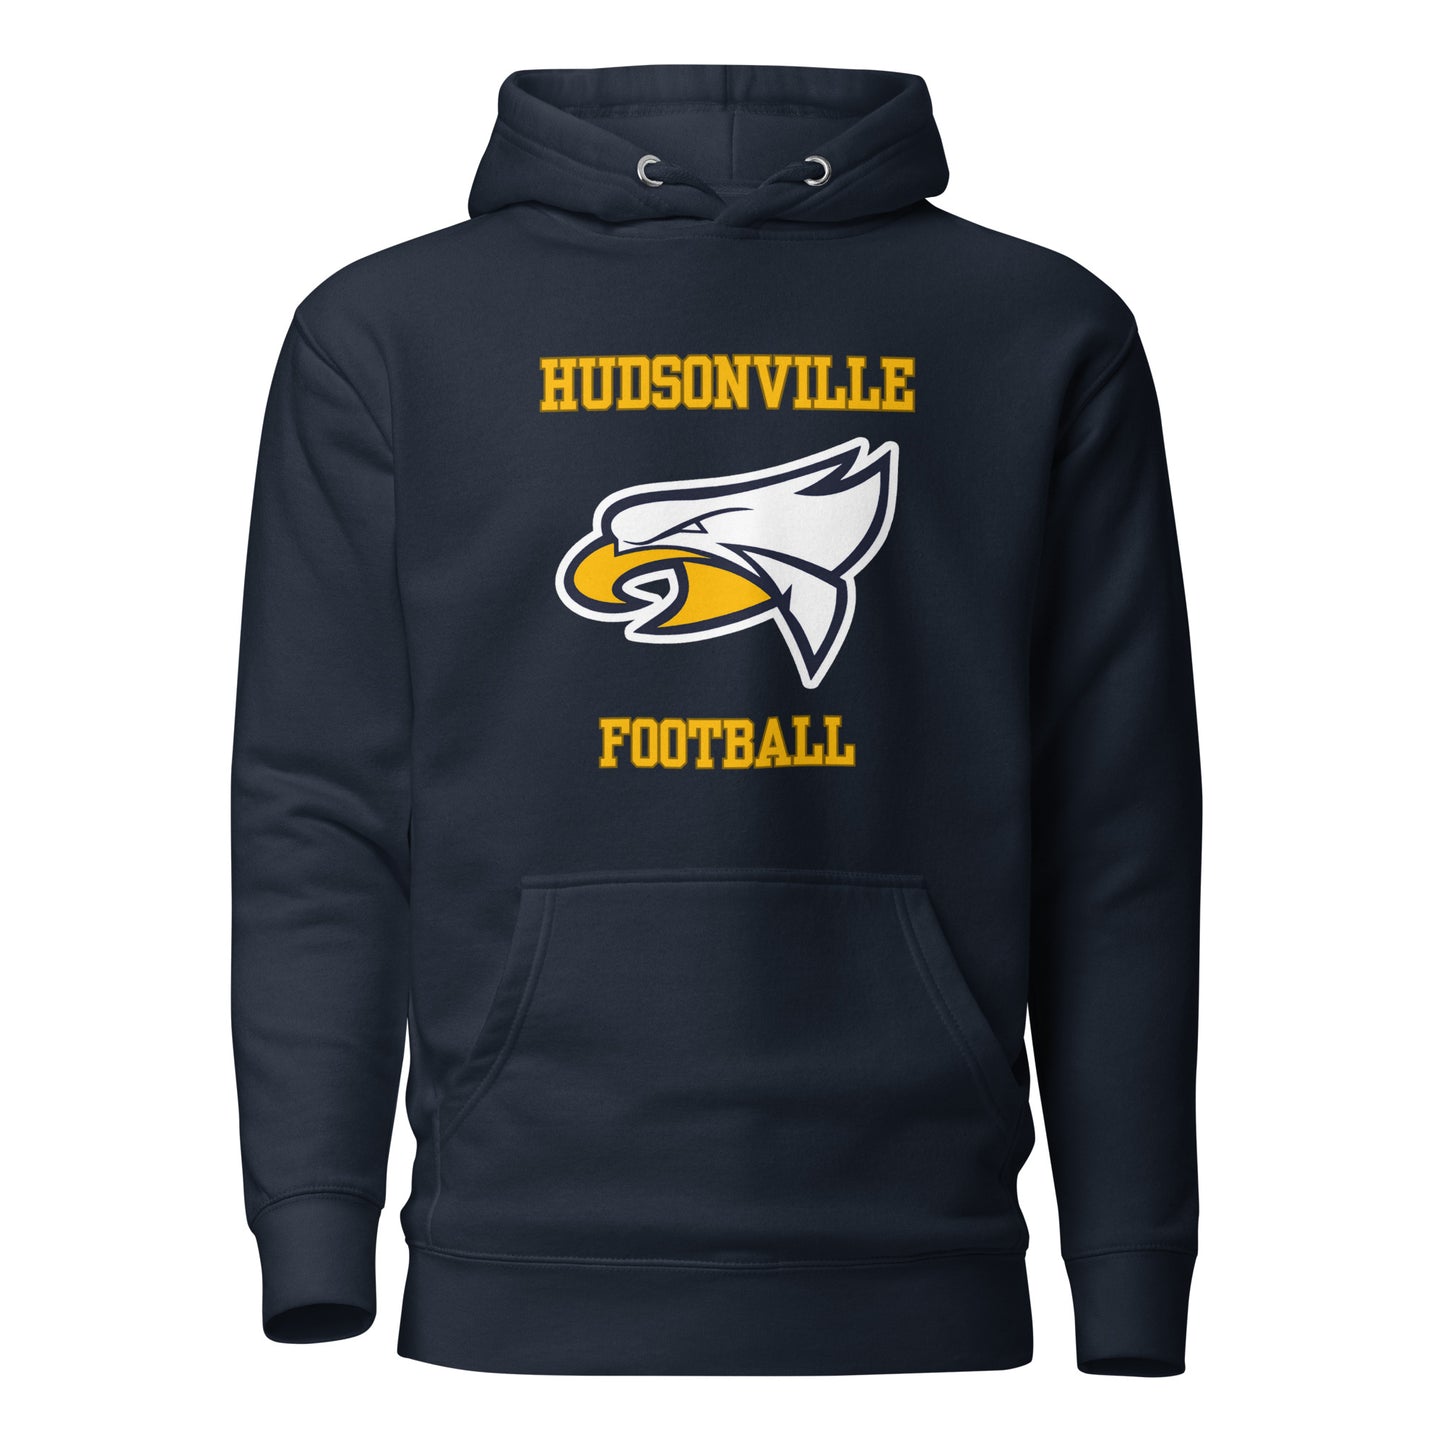 Hudsonville Football Unisex Hoodie